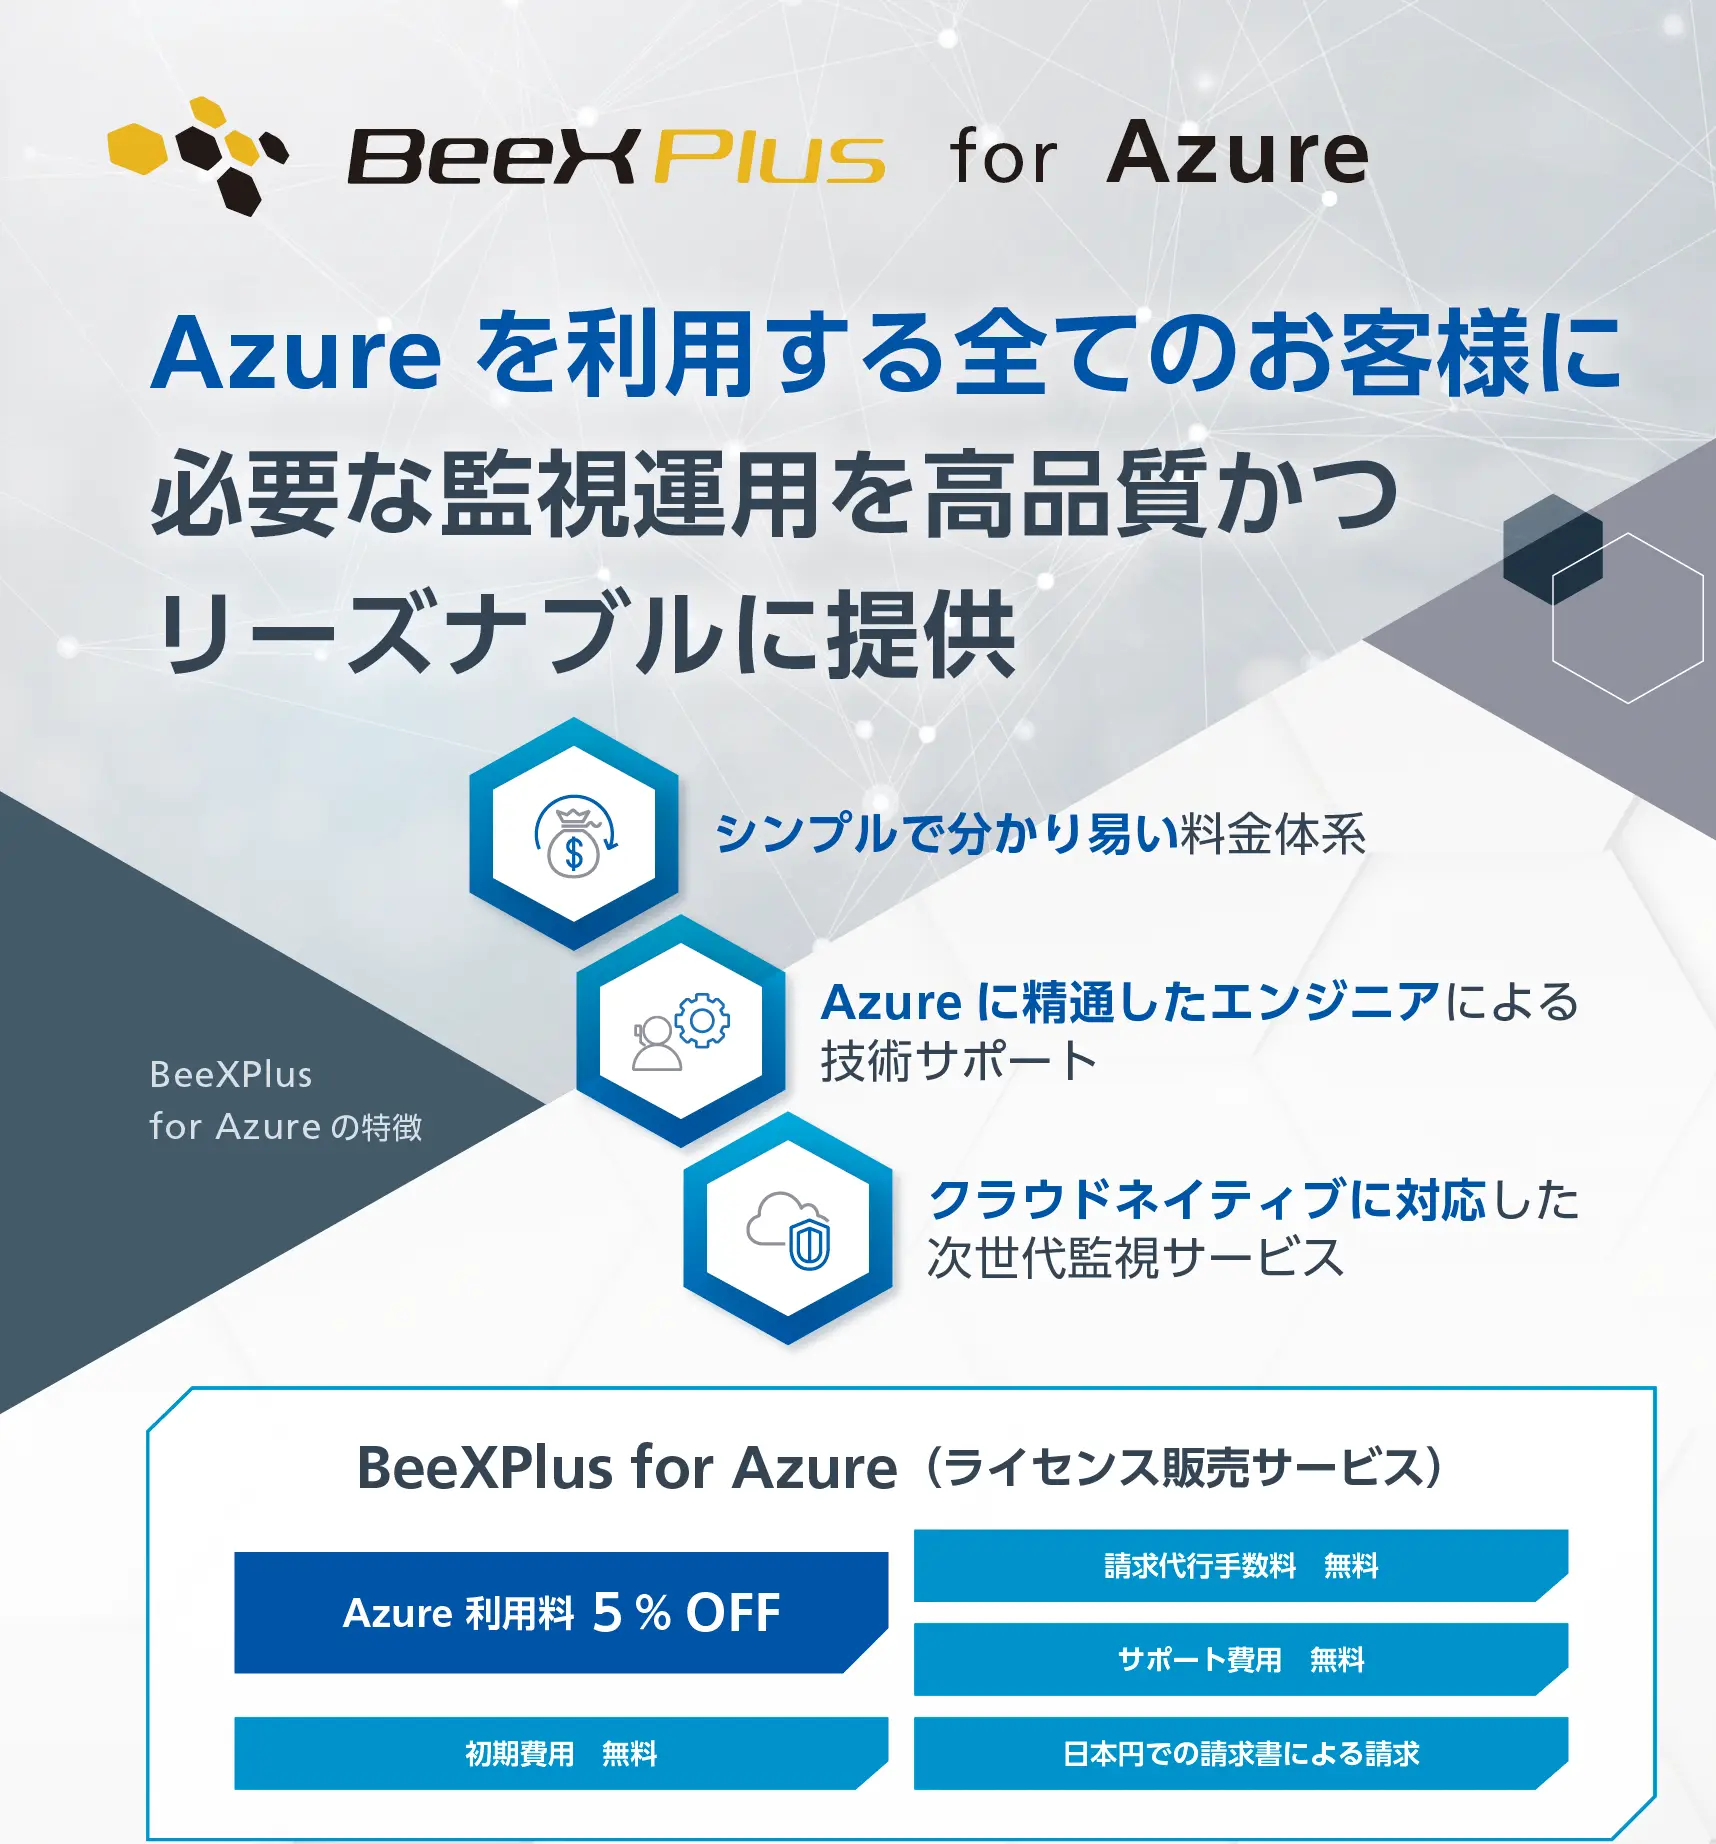 BeeXPlus for Azure紹介リーフレット